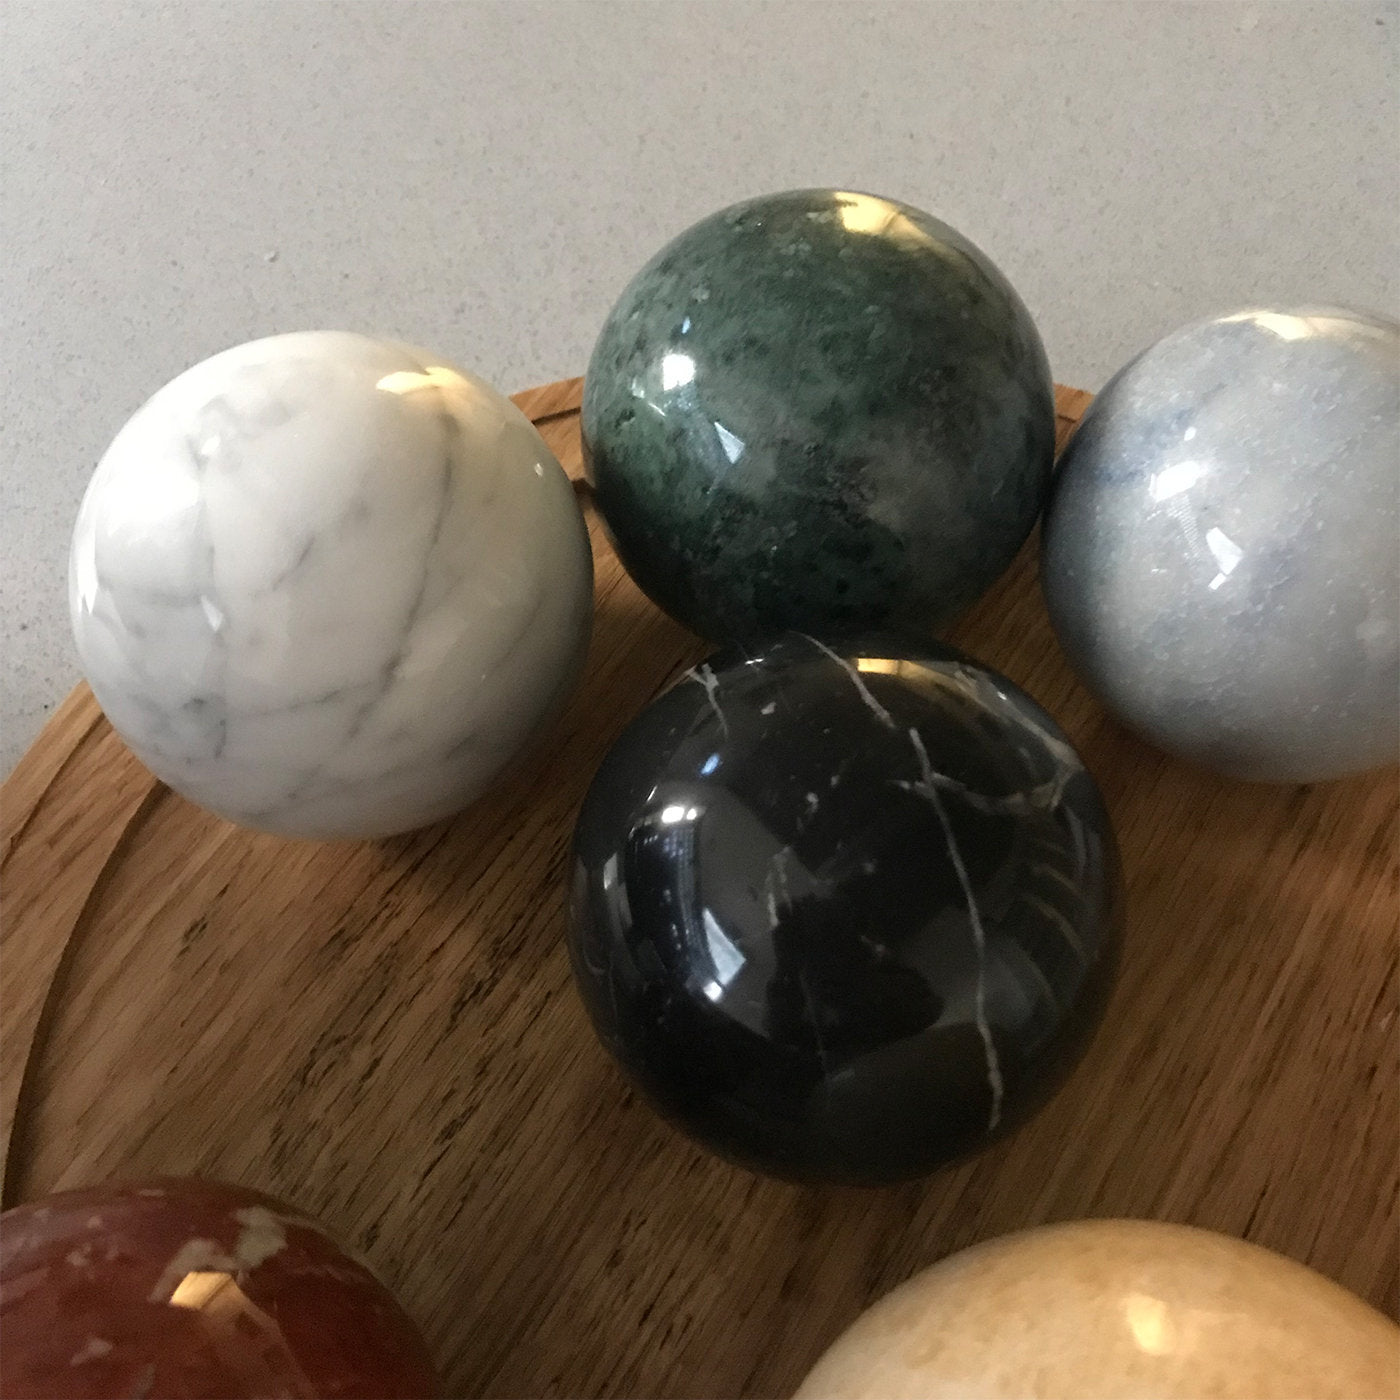 White Marble Decorative Sphere #1 - Alternative view 1